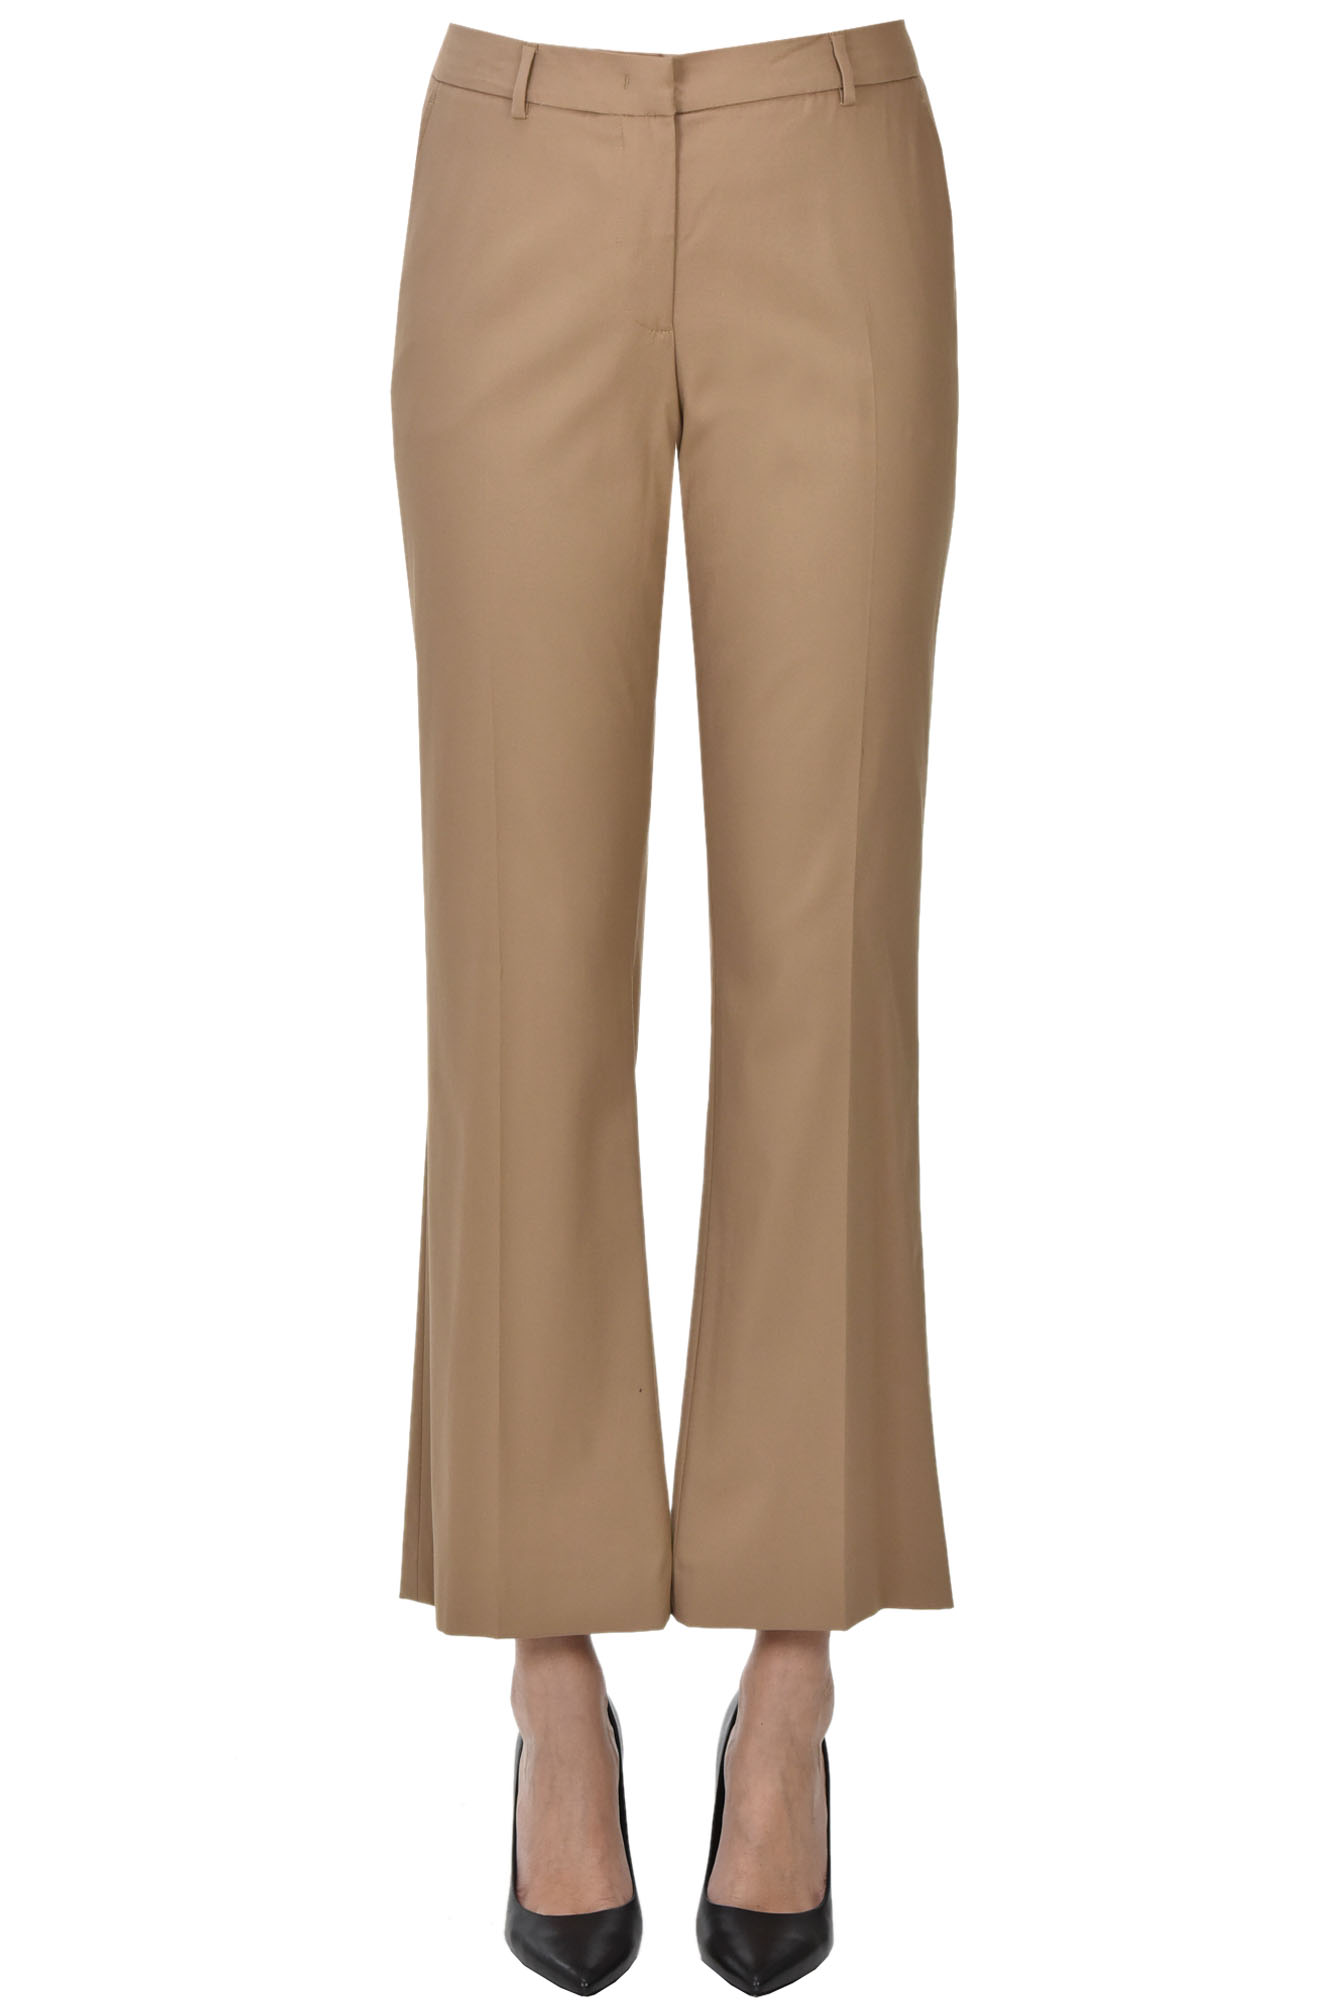 Pt Torino Jaine Cotton Trousers In Light Brown